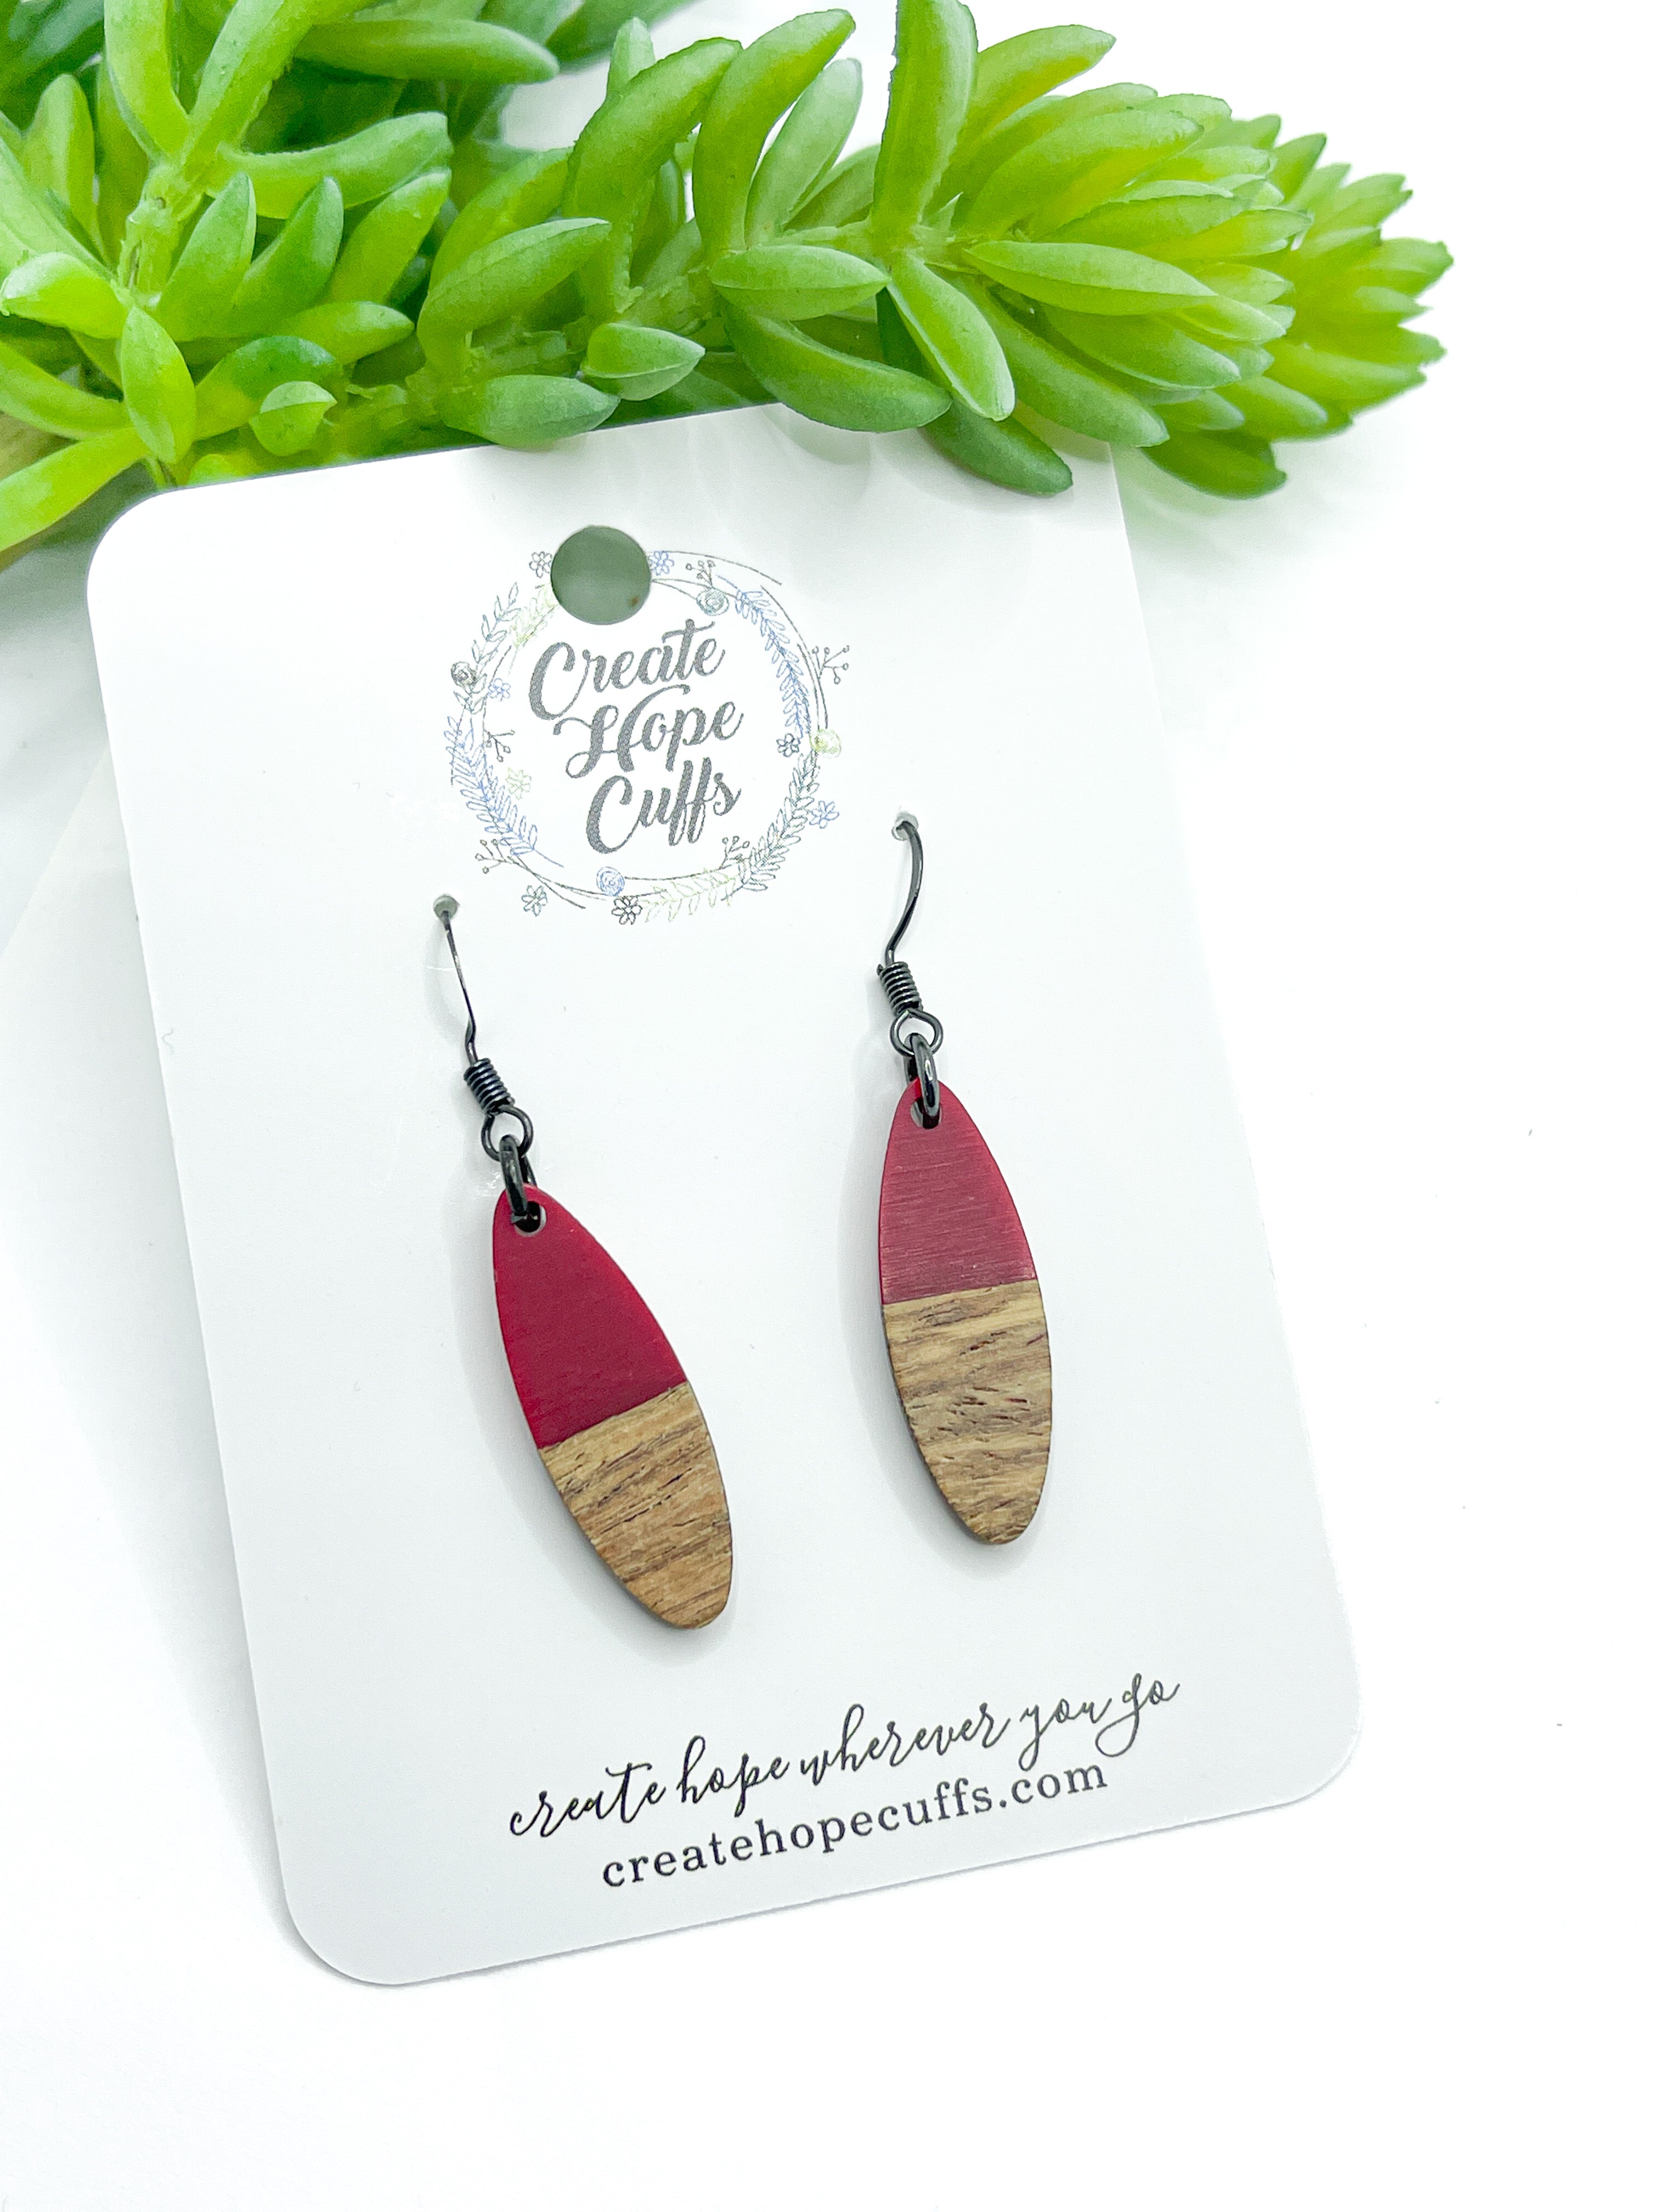 Petite Red Oval Resin & Wood Earrings, hypoallergenic Wood Earrings Create Hope Cuffs 